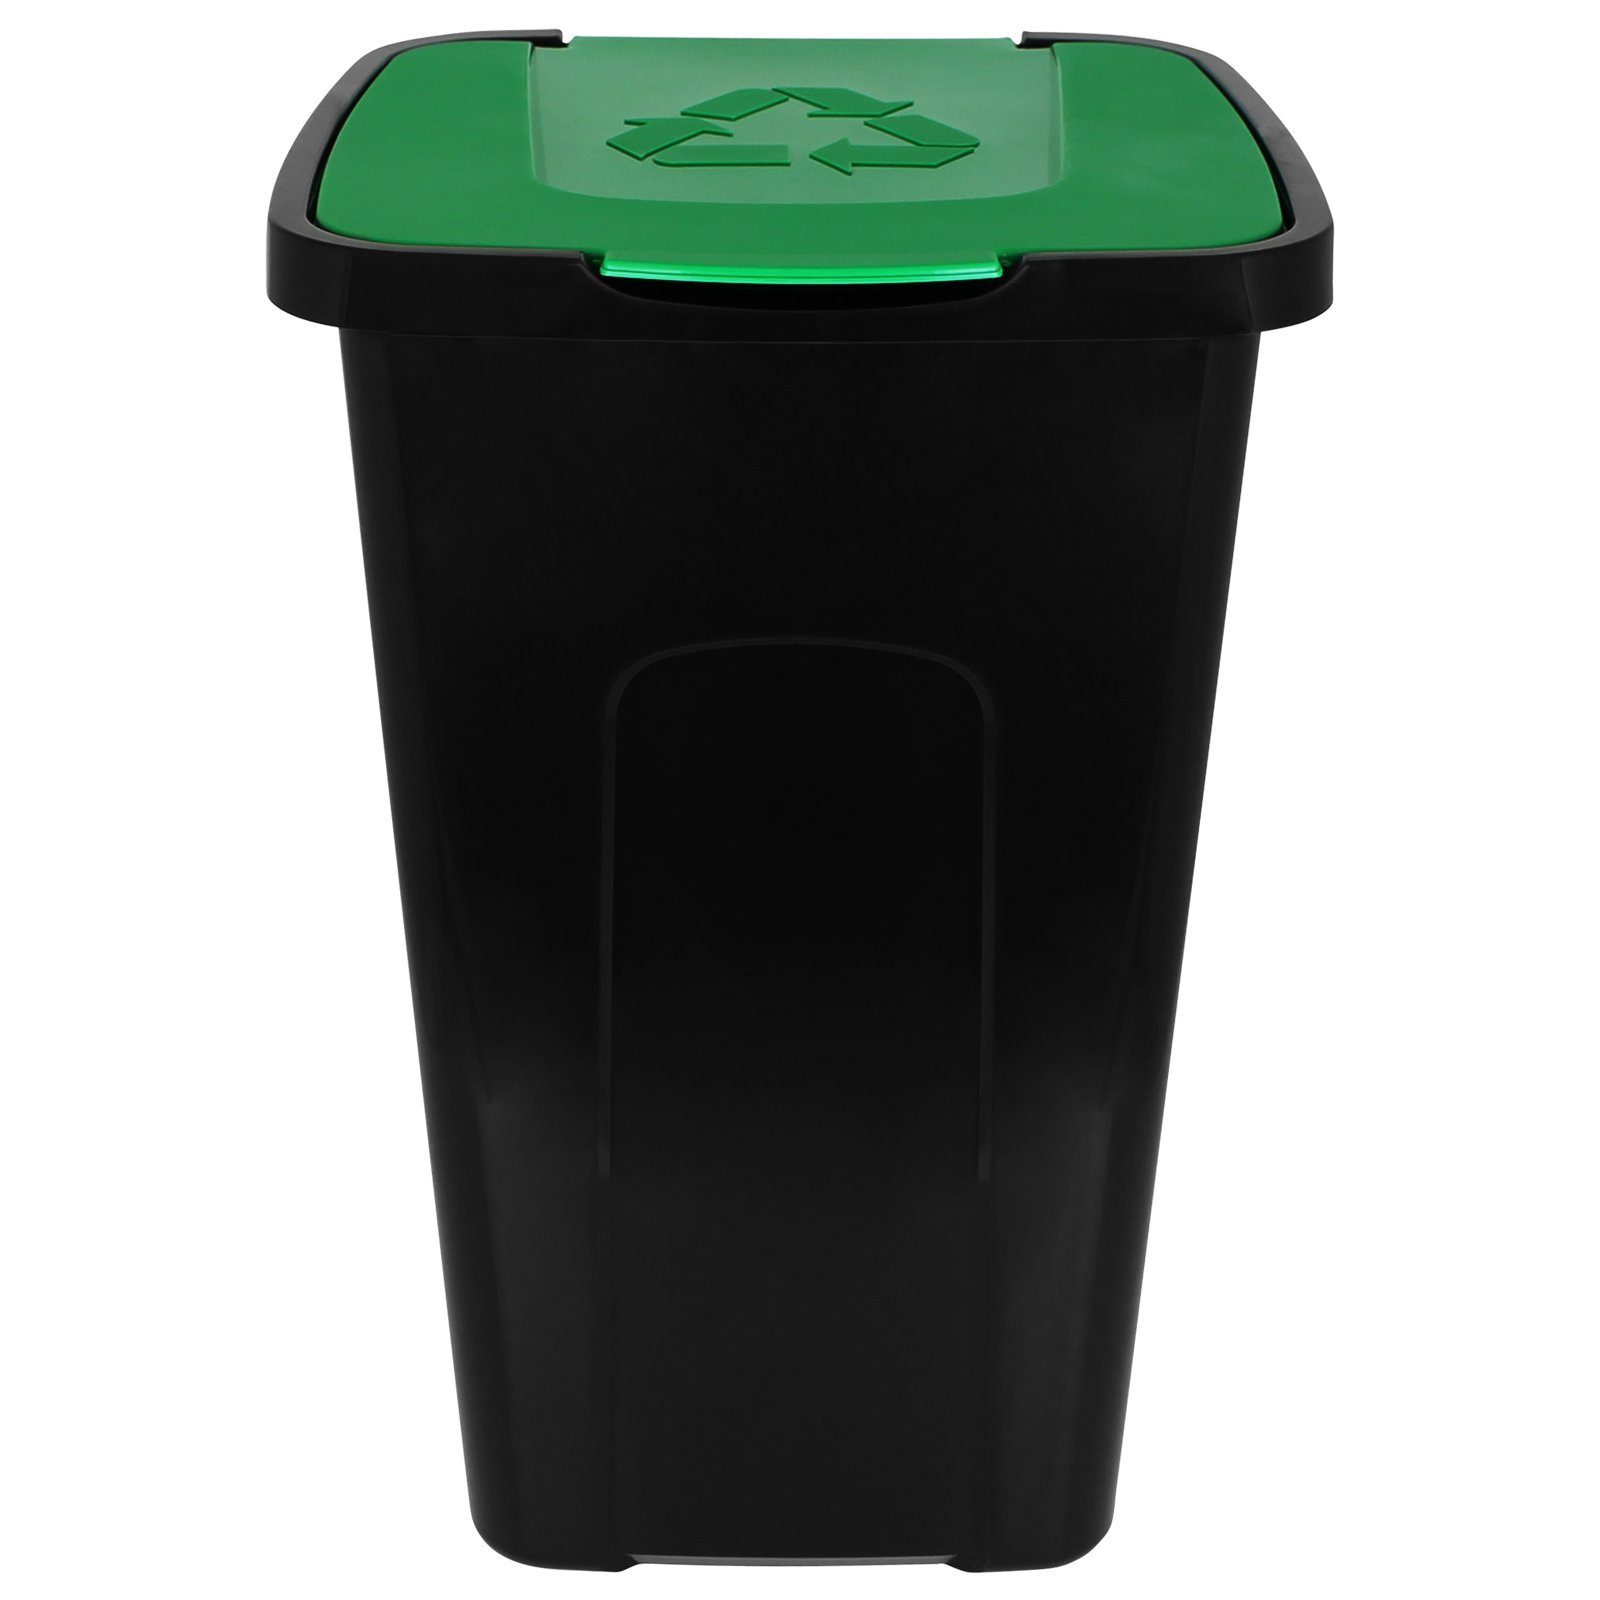 Abfalltonne Trennsystem Recycling Mülleimer - 50L Mülltrenner Centi Mülltonne Mülltrennsystem Abfallsammler 3er Set,